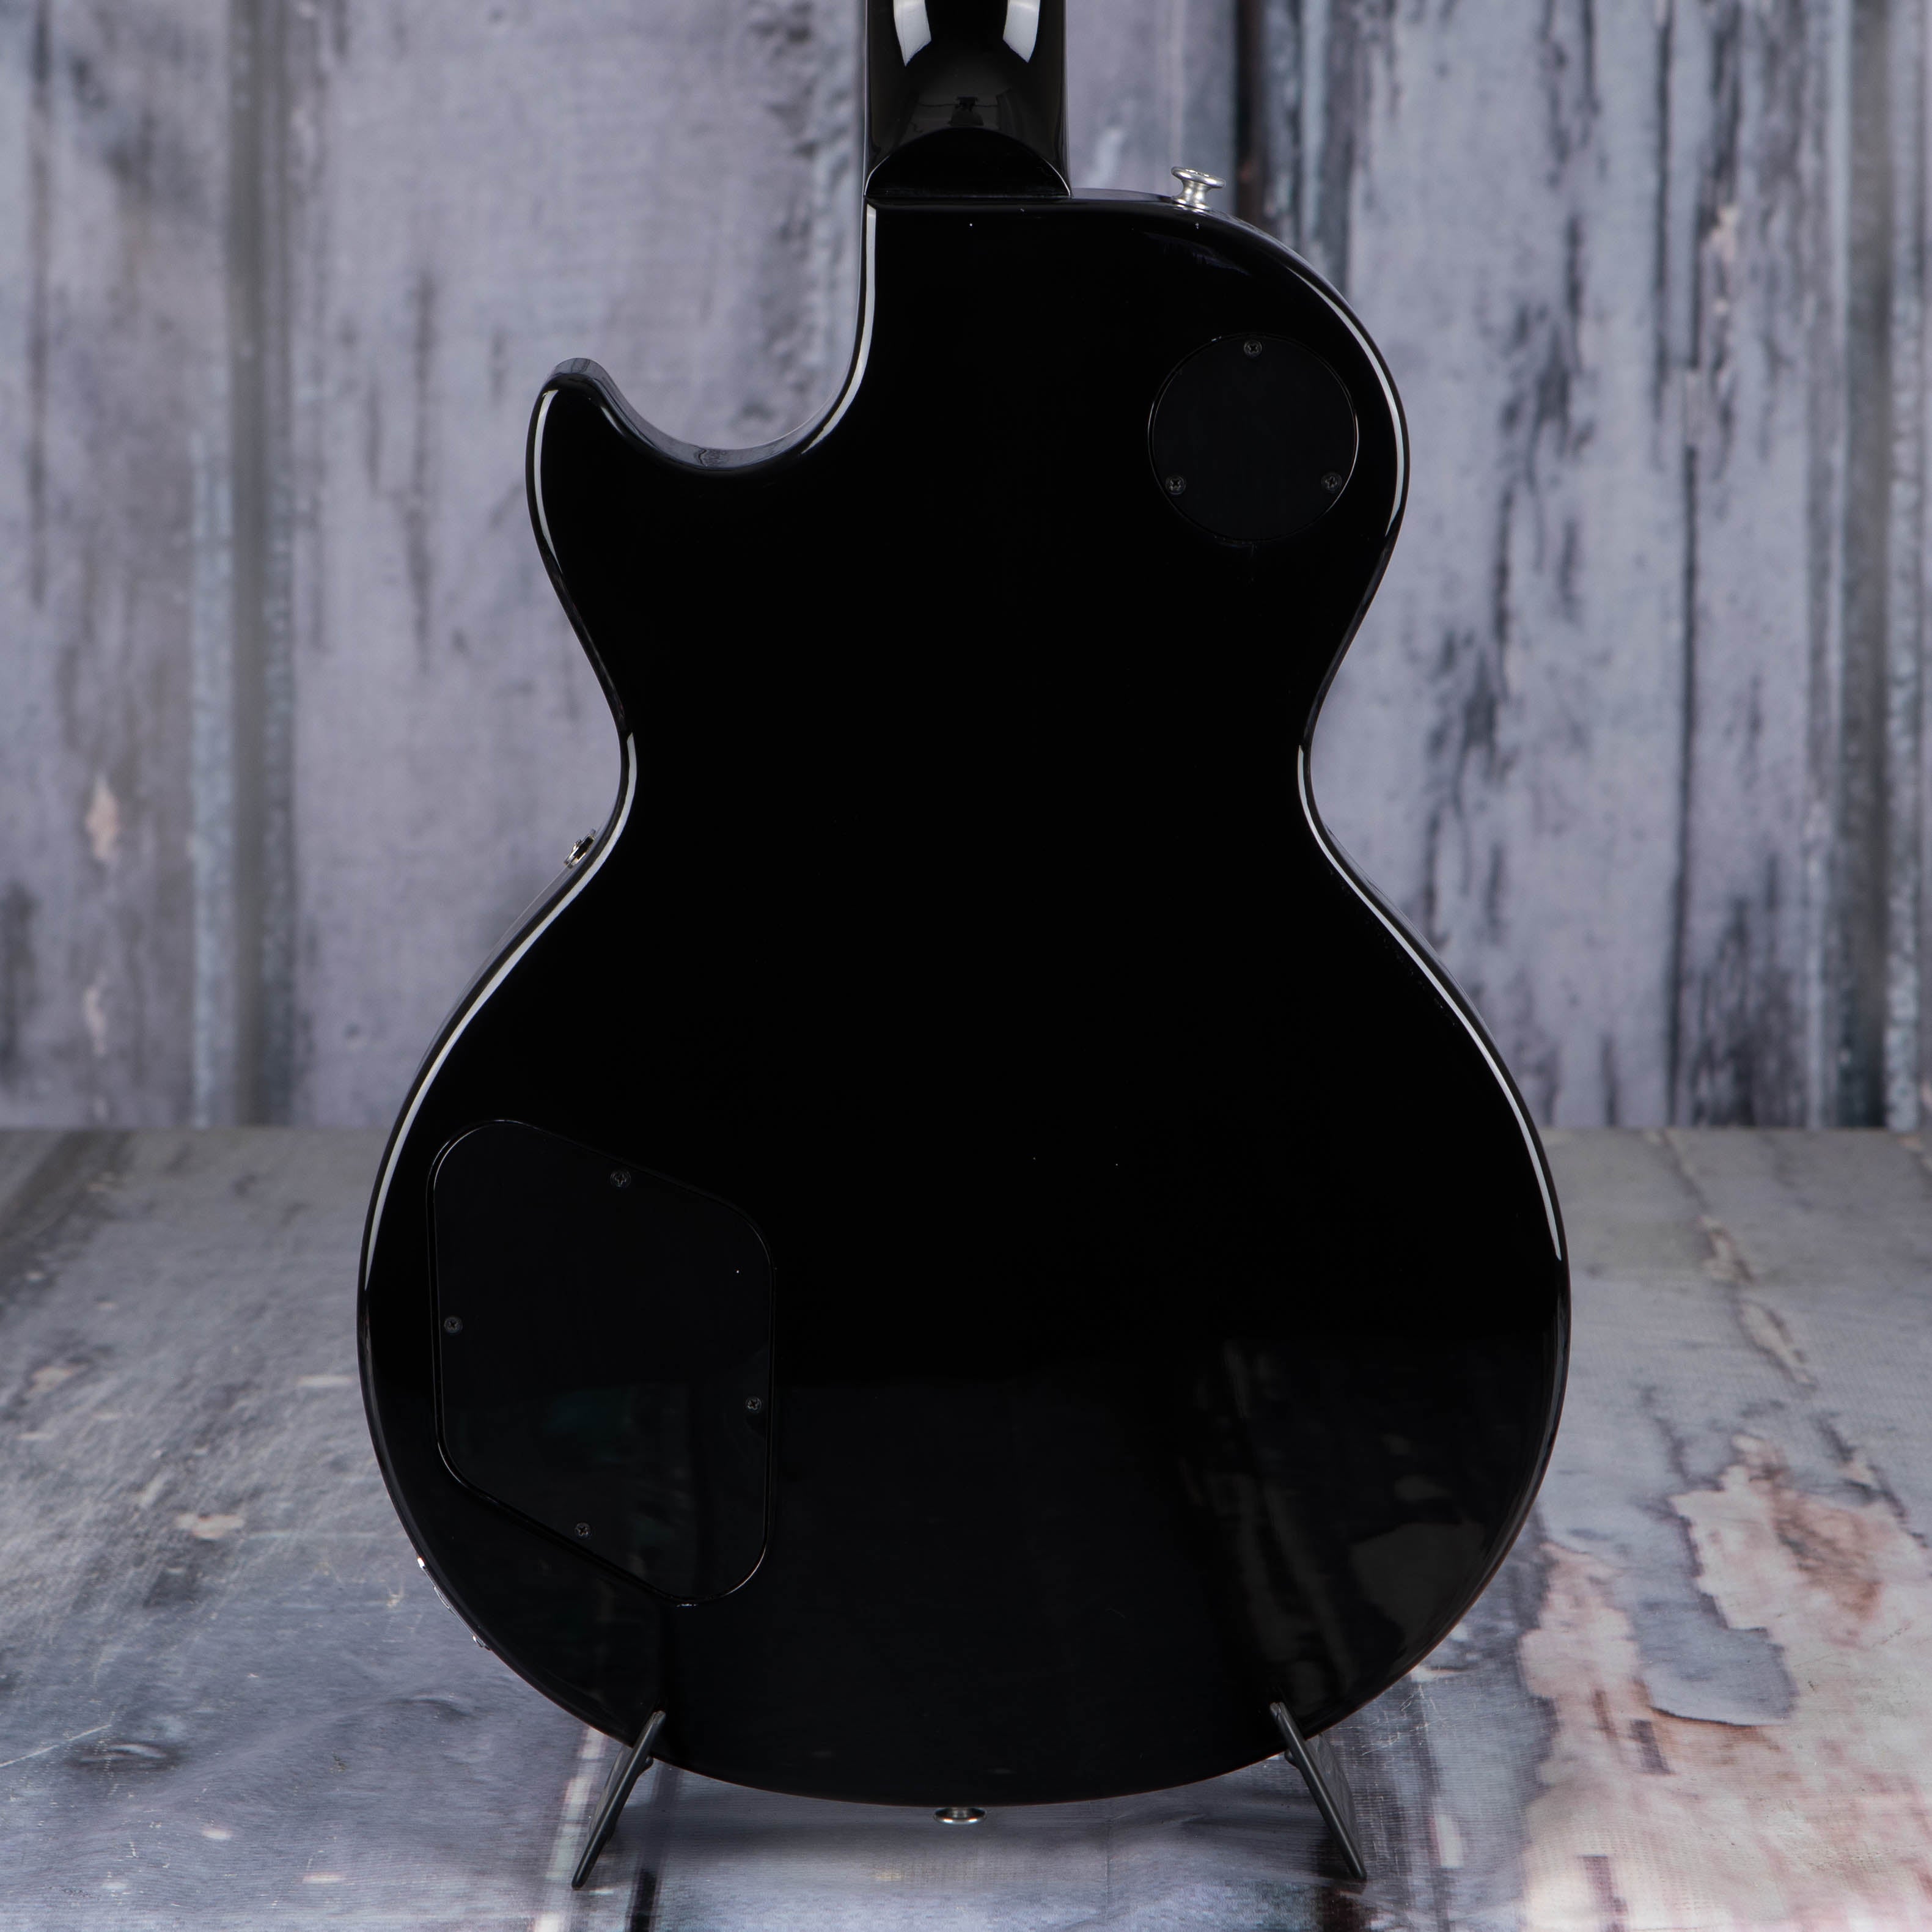 Gibson USA Les Paul Classic Electric Guitar, Ebony, back closeup